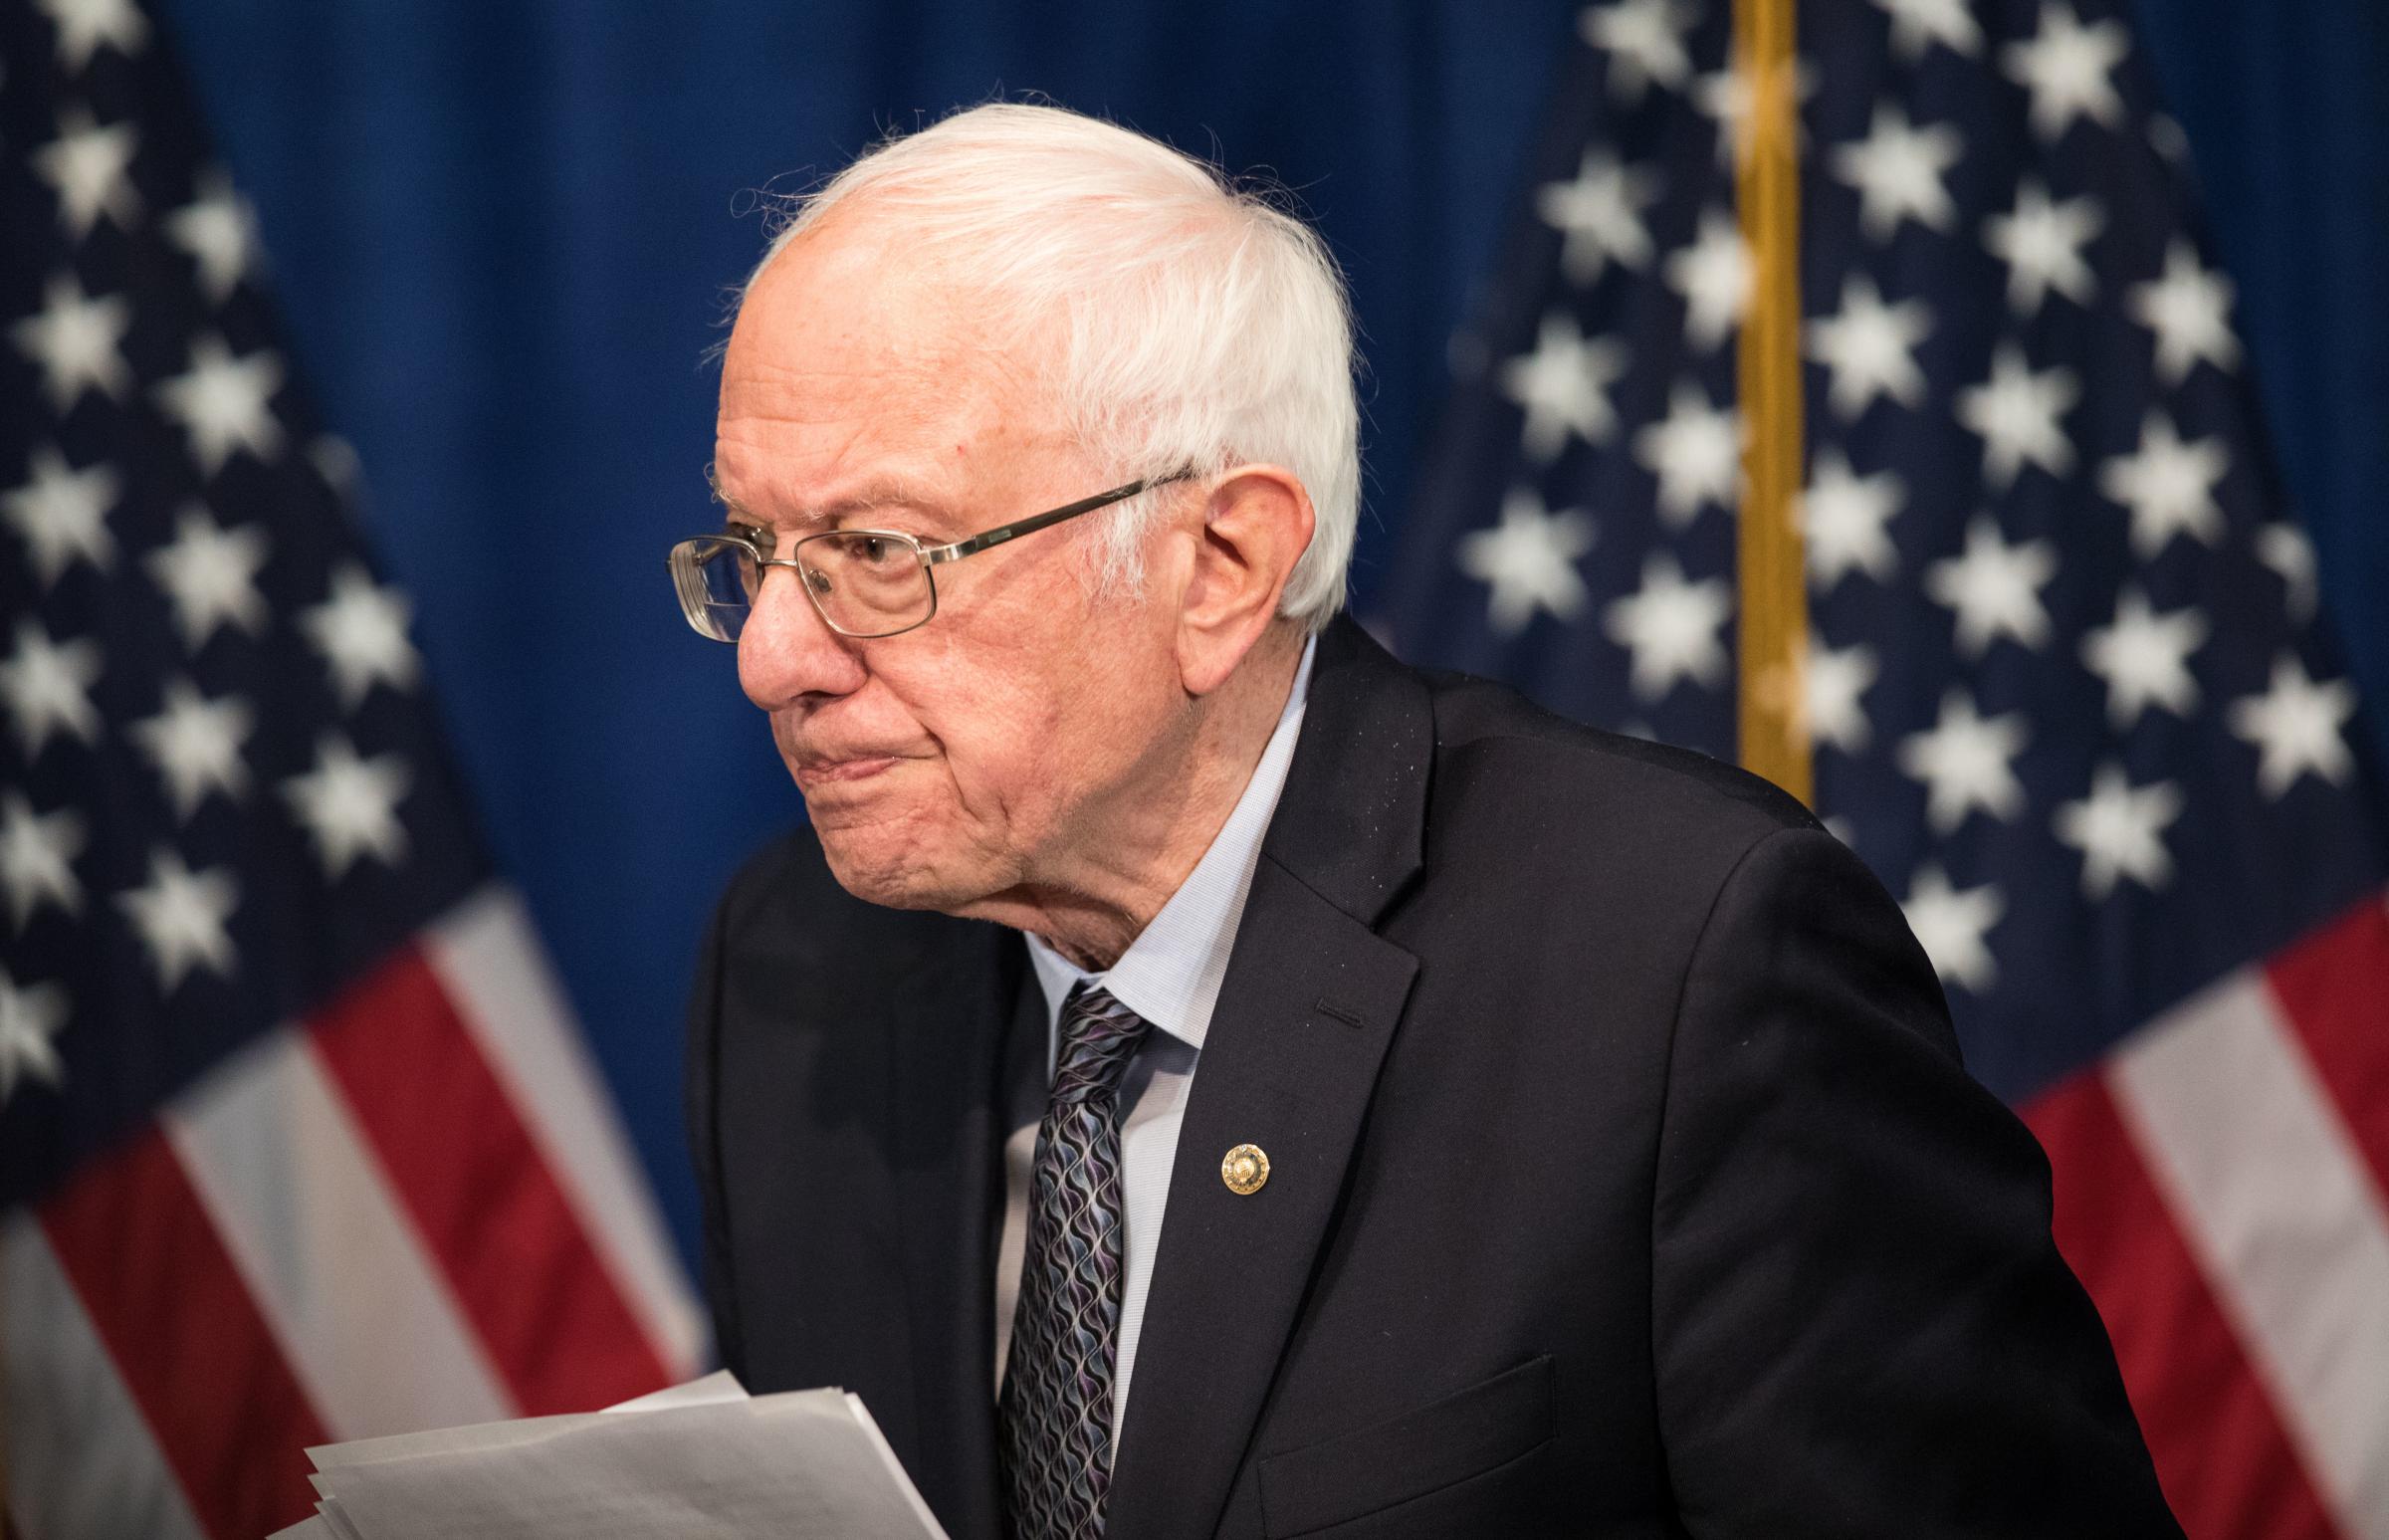 Bernie Sanders To Stay In The Race Despite Key Losses WUSF News